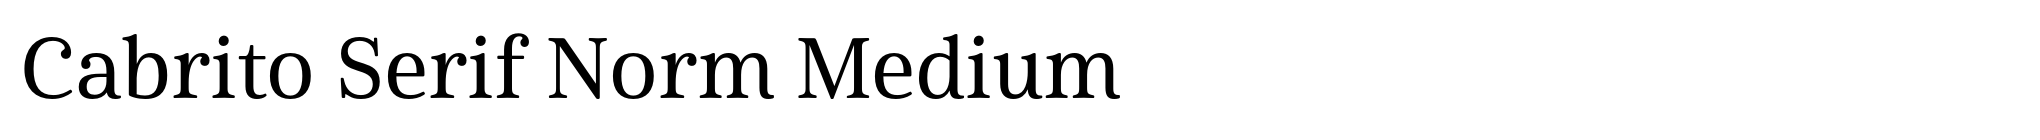 Cabrito Serif Norm Medium image